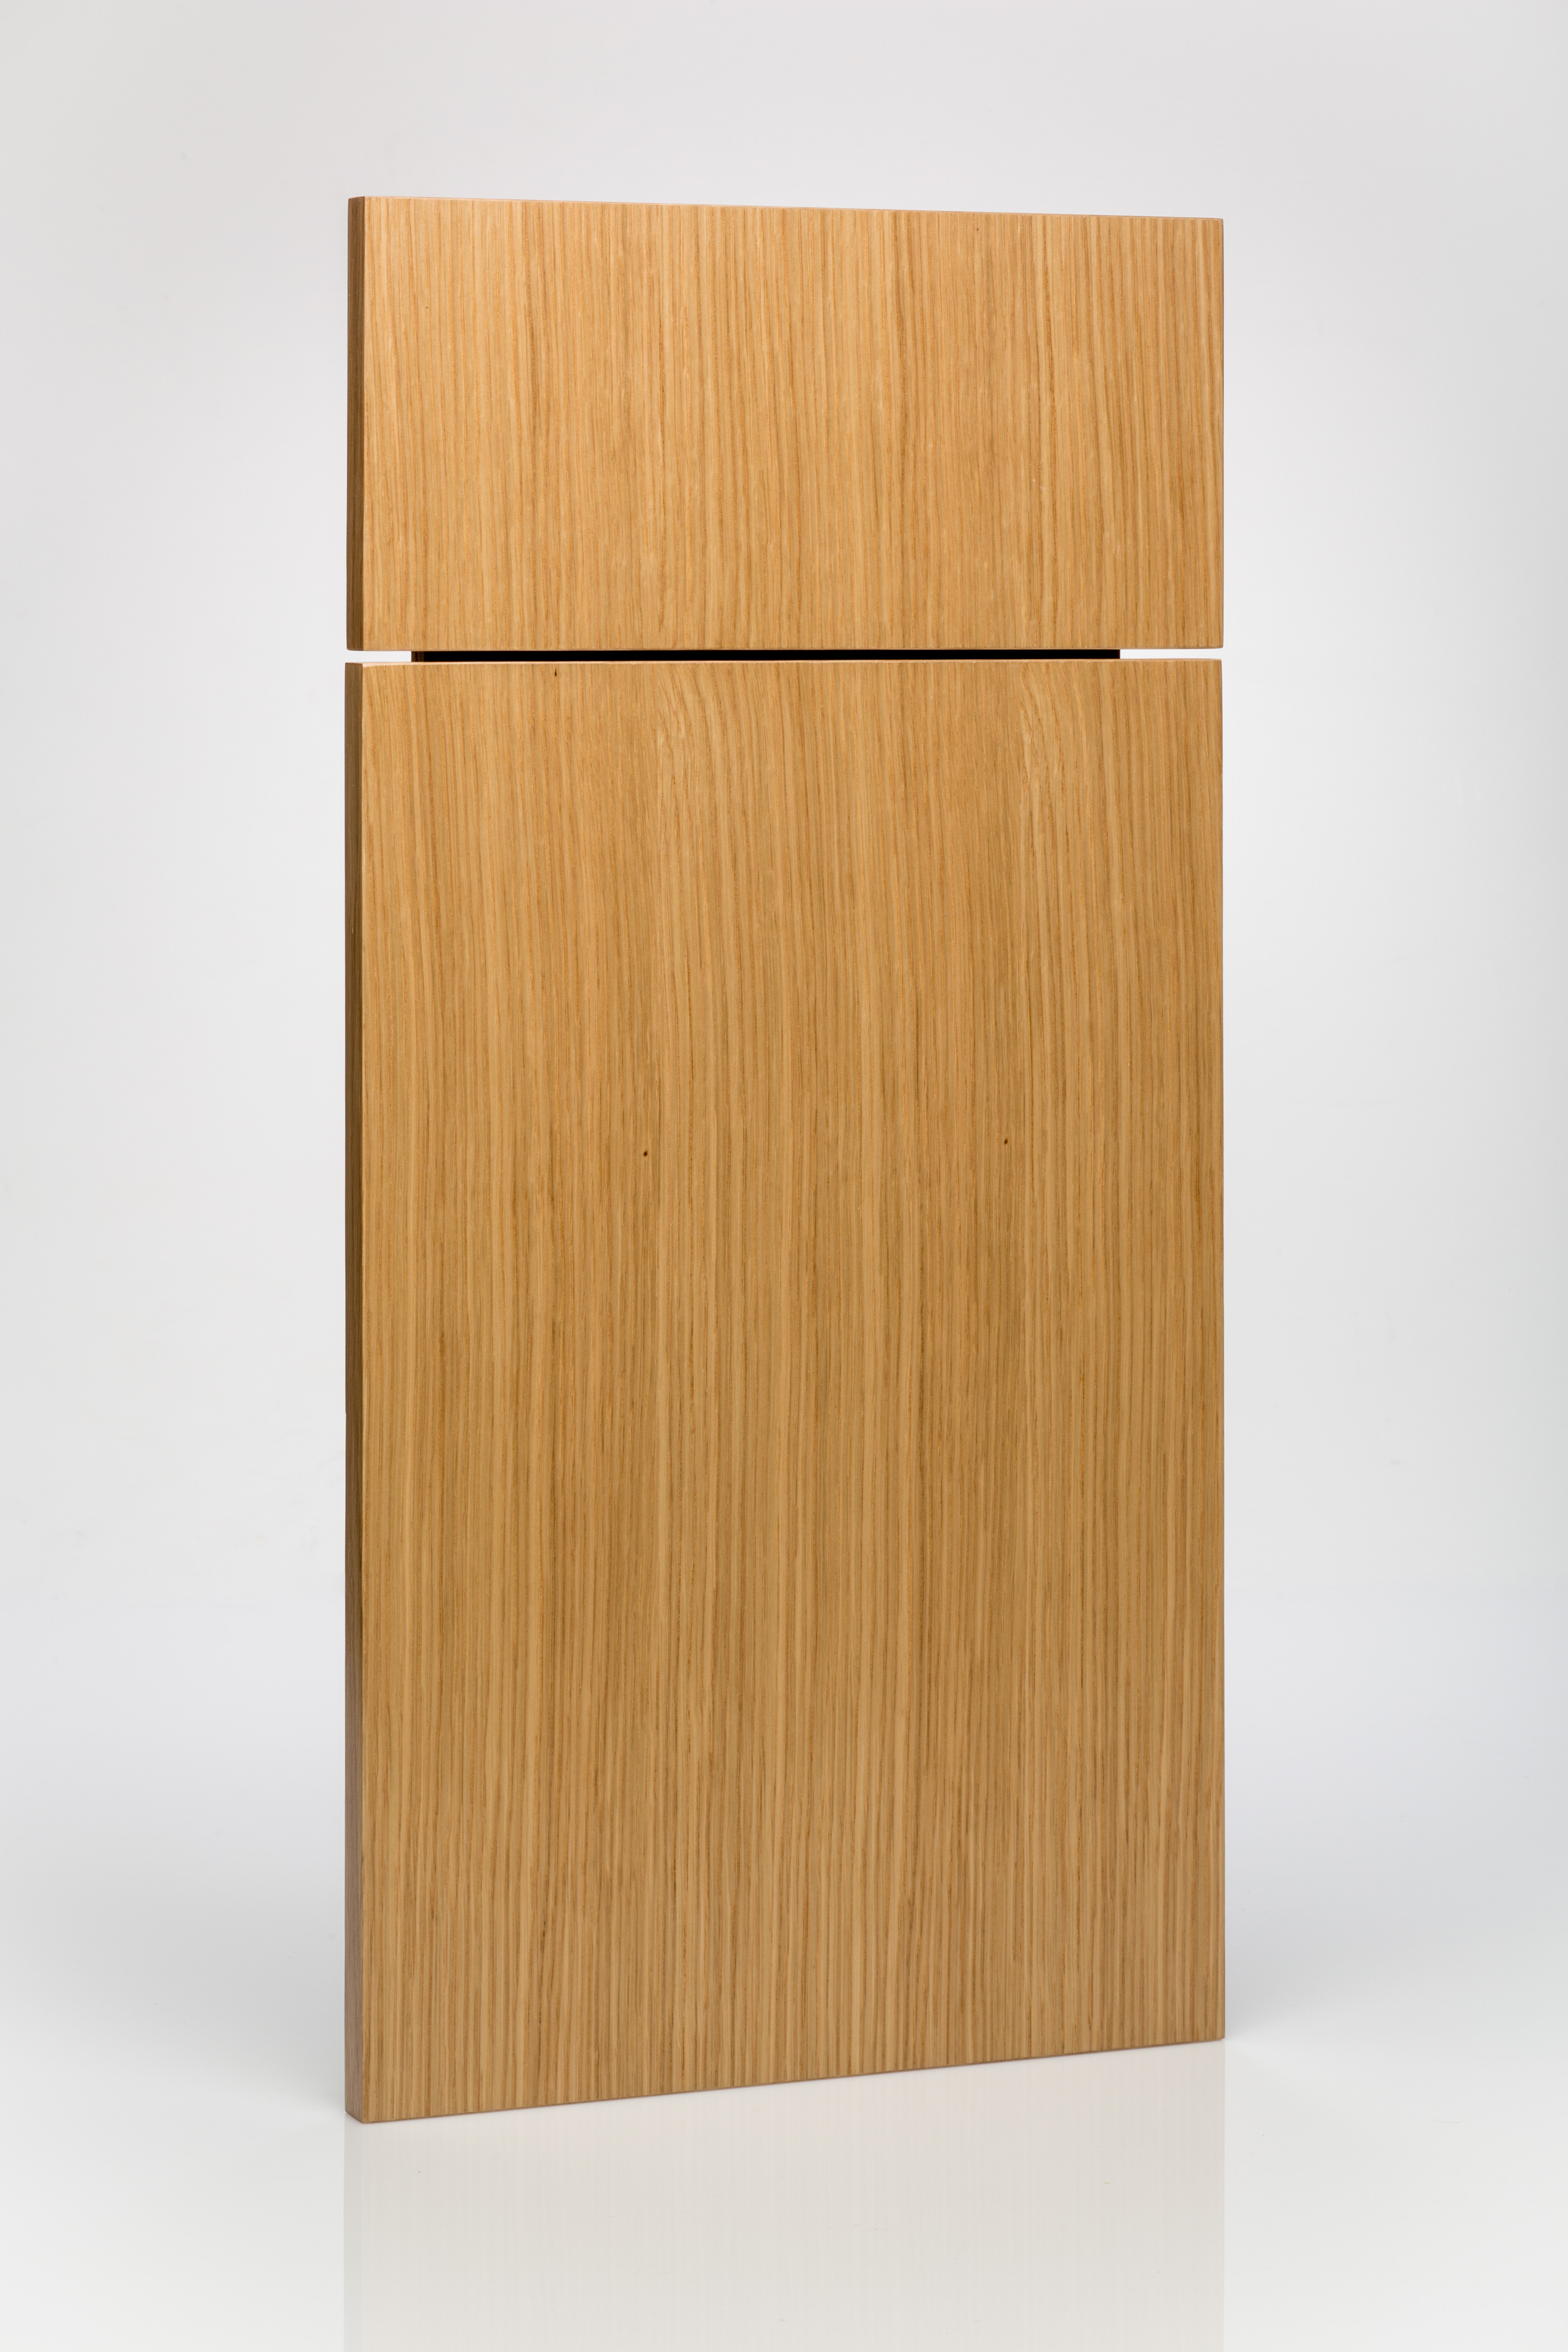 Natural Wood Doors For Ikea Cabinets Custom Doors Casework For